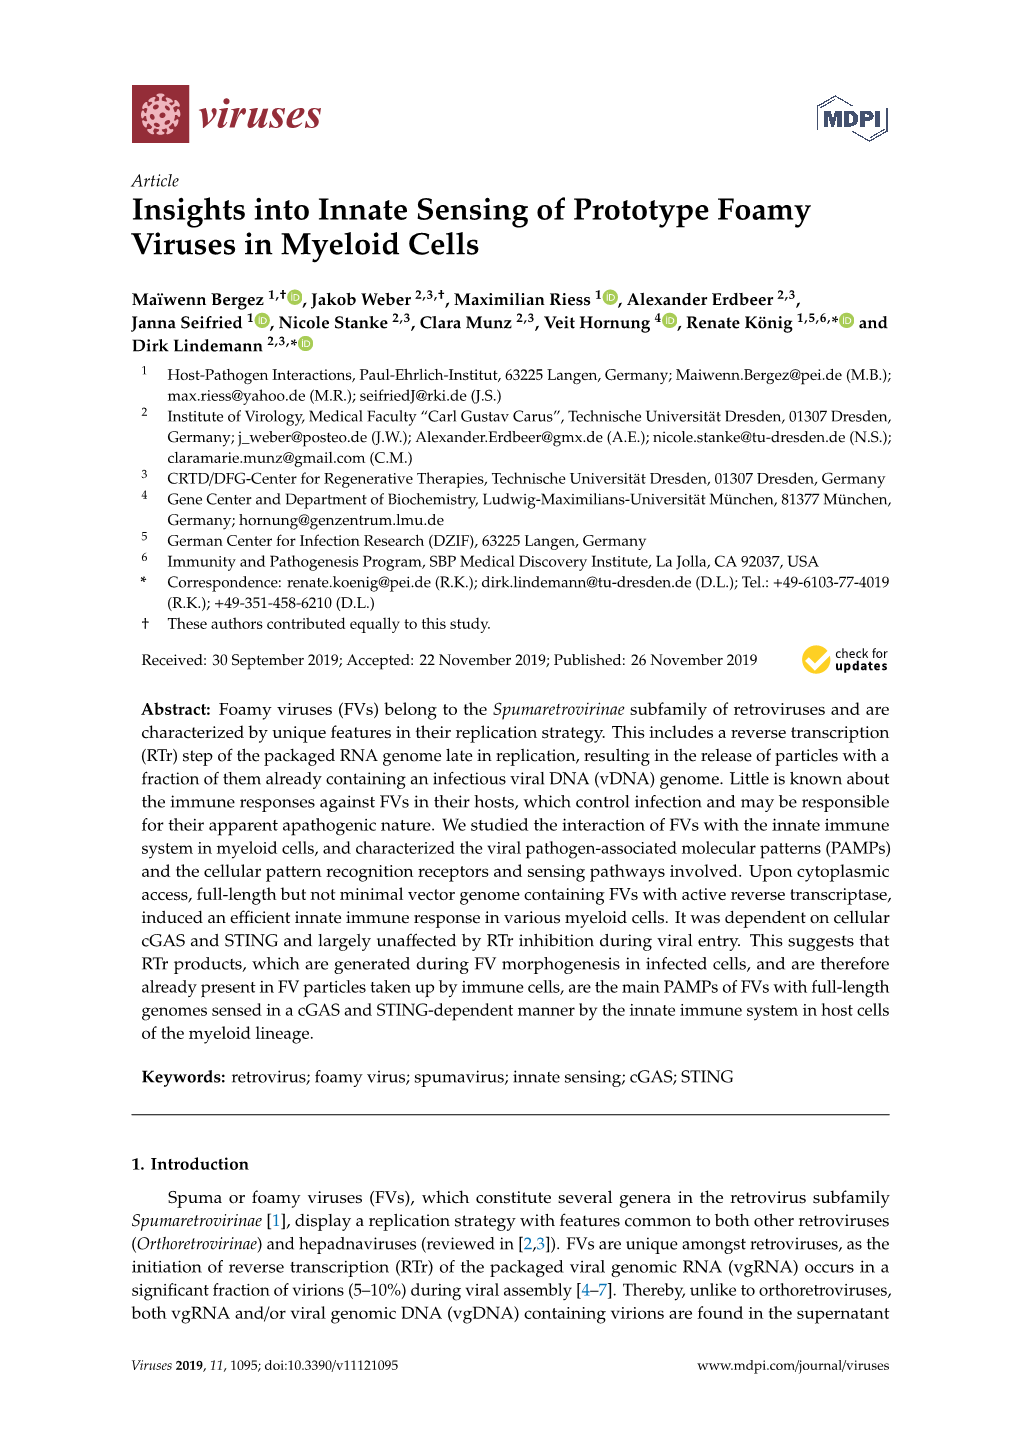 Insights Into Innate Sensing of Prototype Foamy Viruses in Myeloid Cells